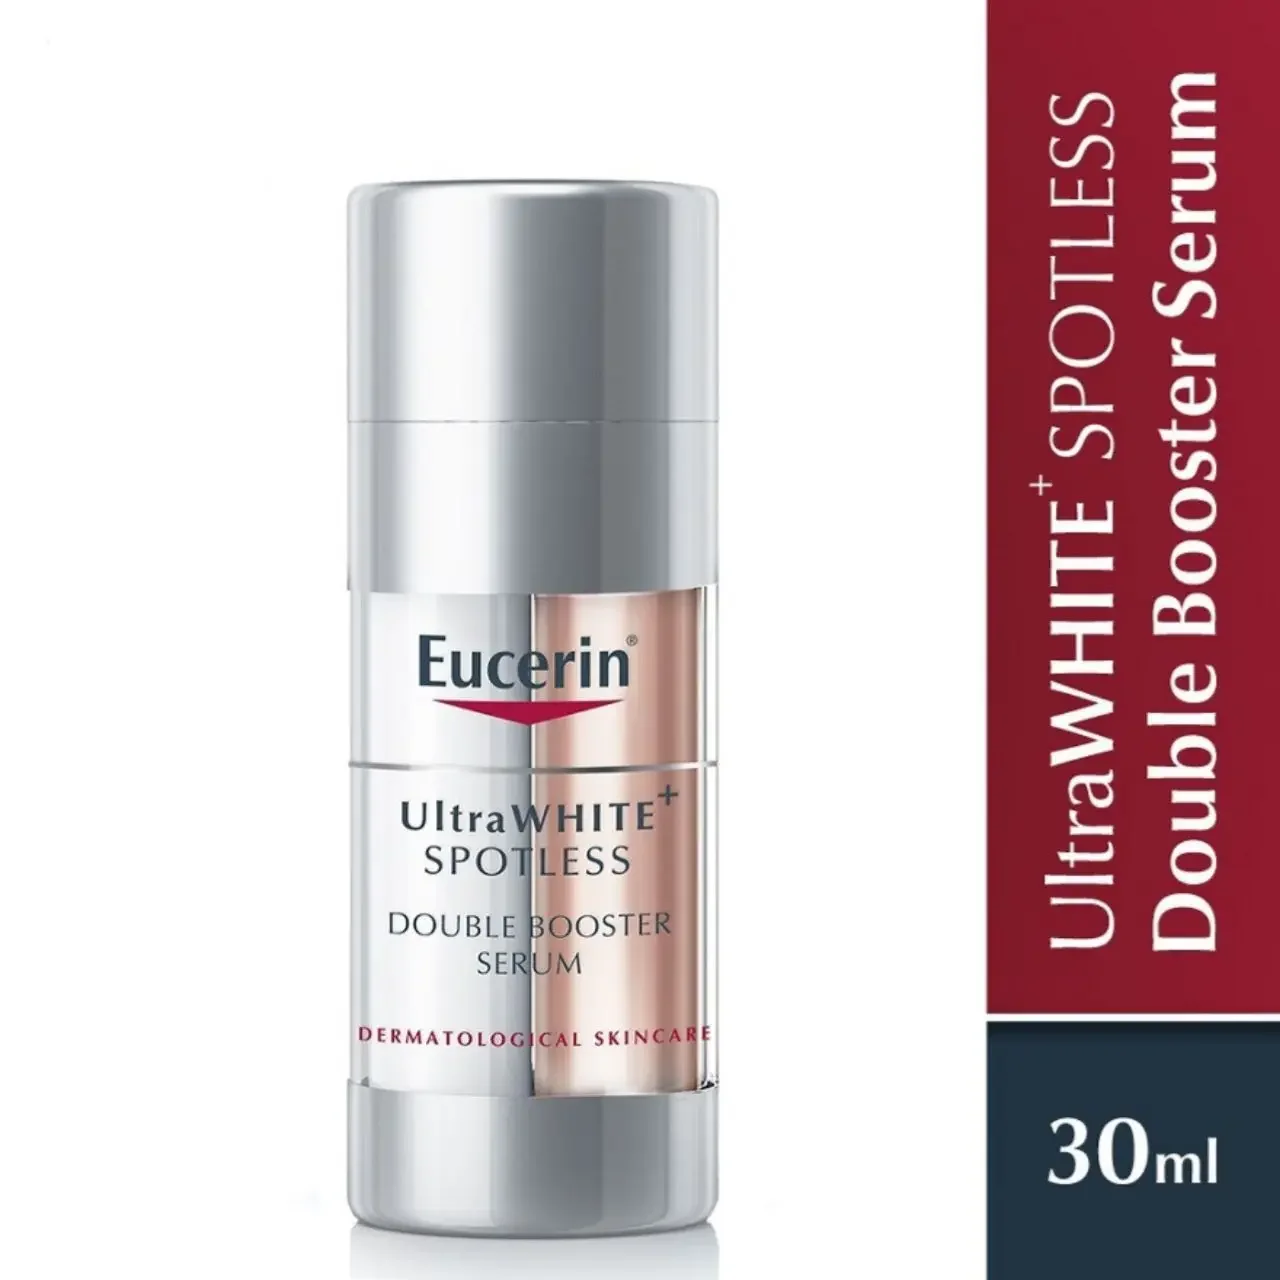 Eucerin Ultrawhite Spotless Double Booster Serum 30ML (Exp 07/2023)